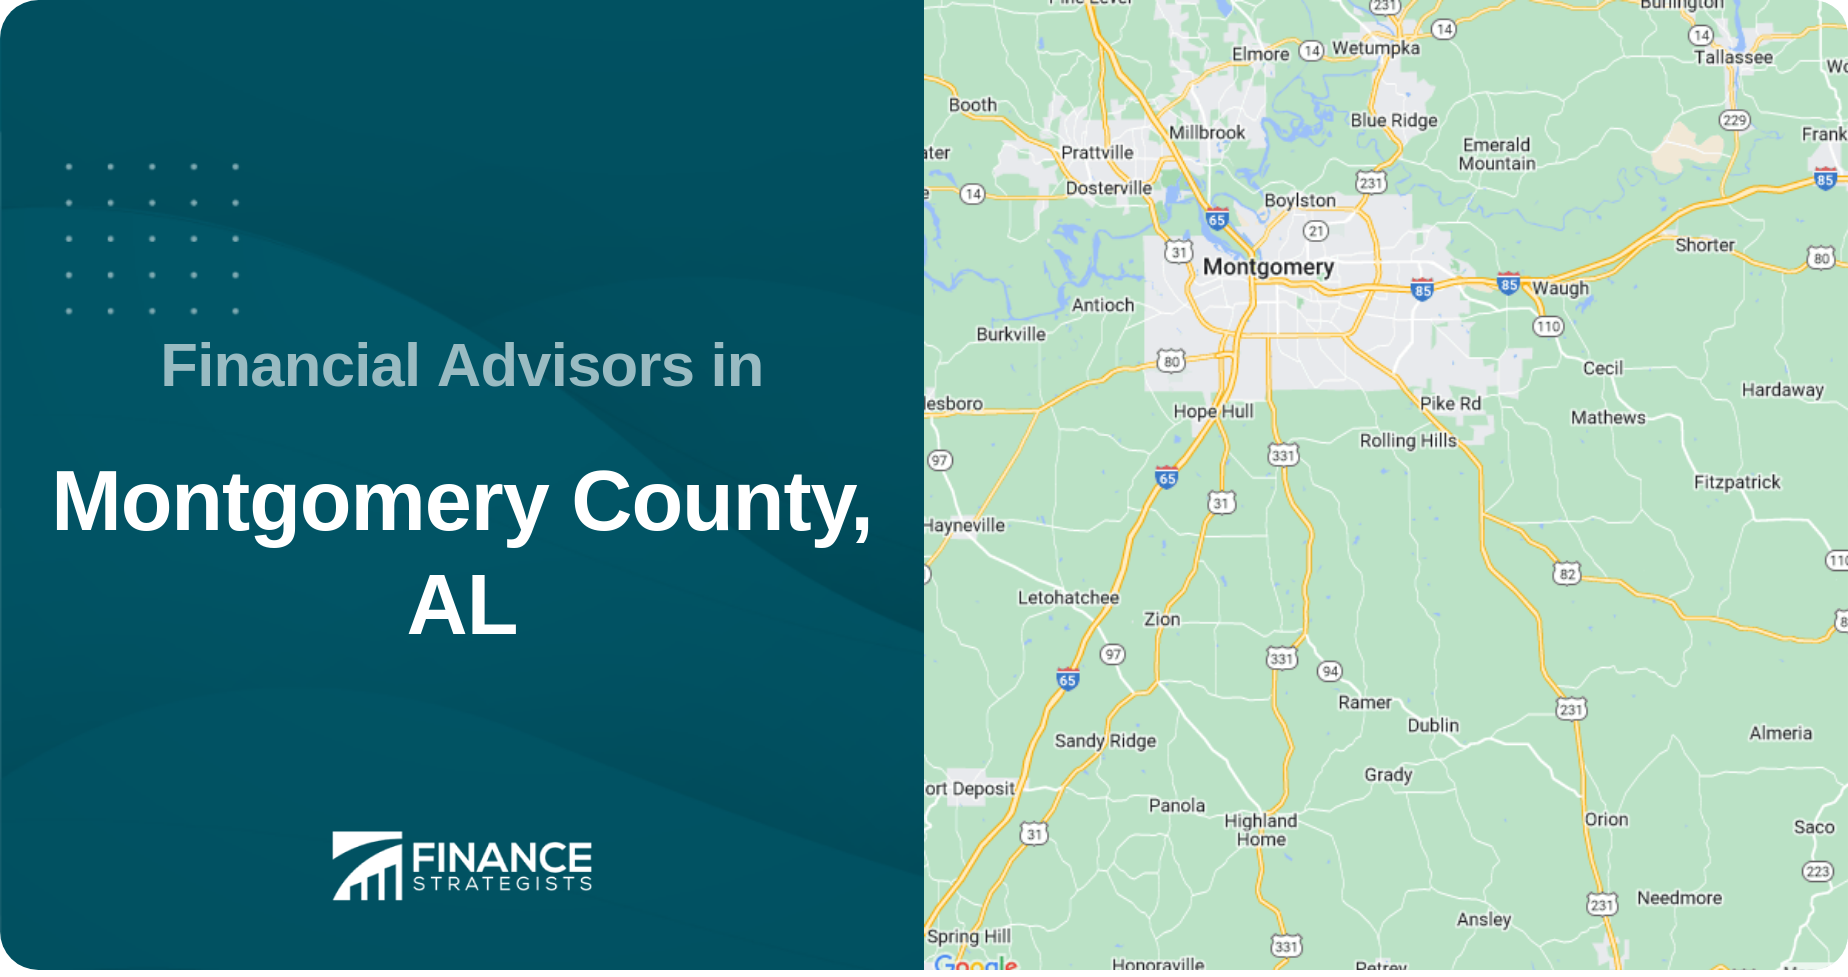 Financial Advisors in Montgomery County, AL